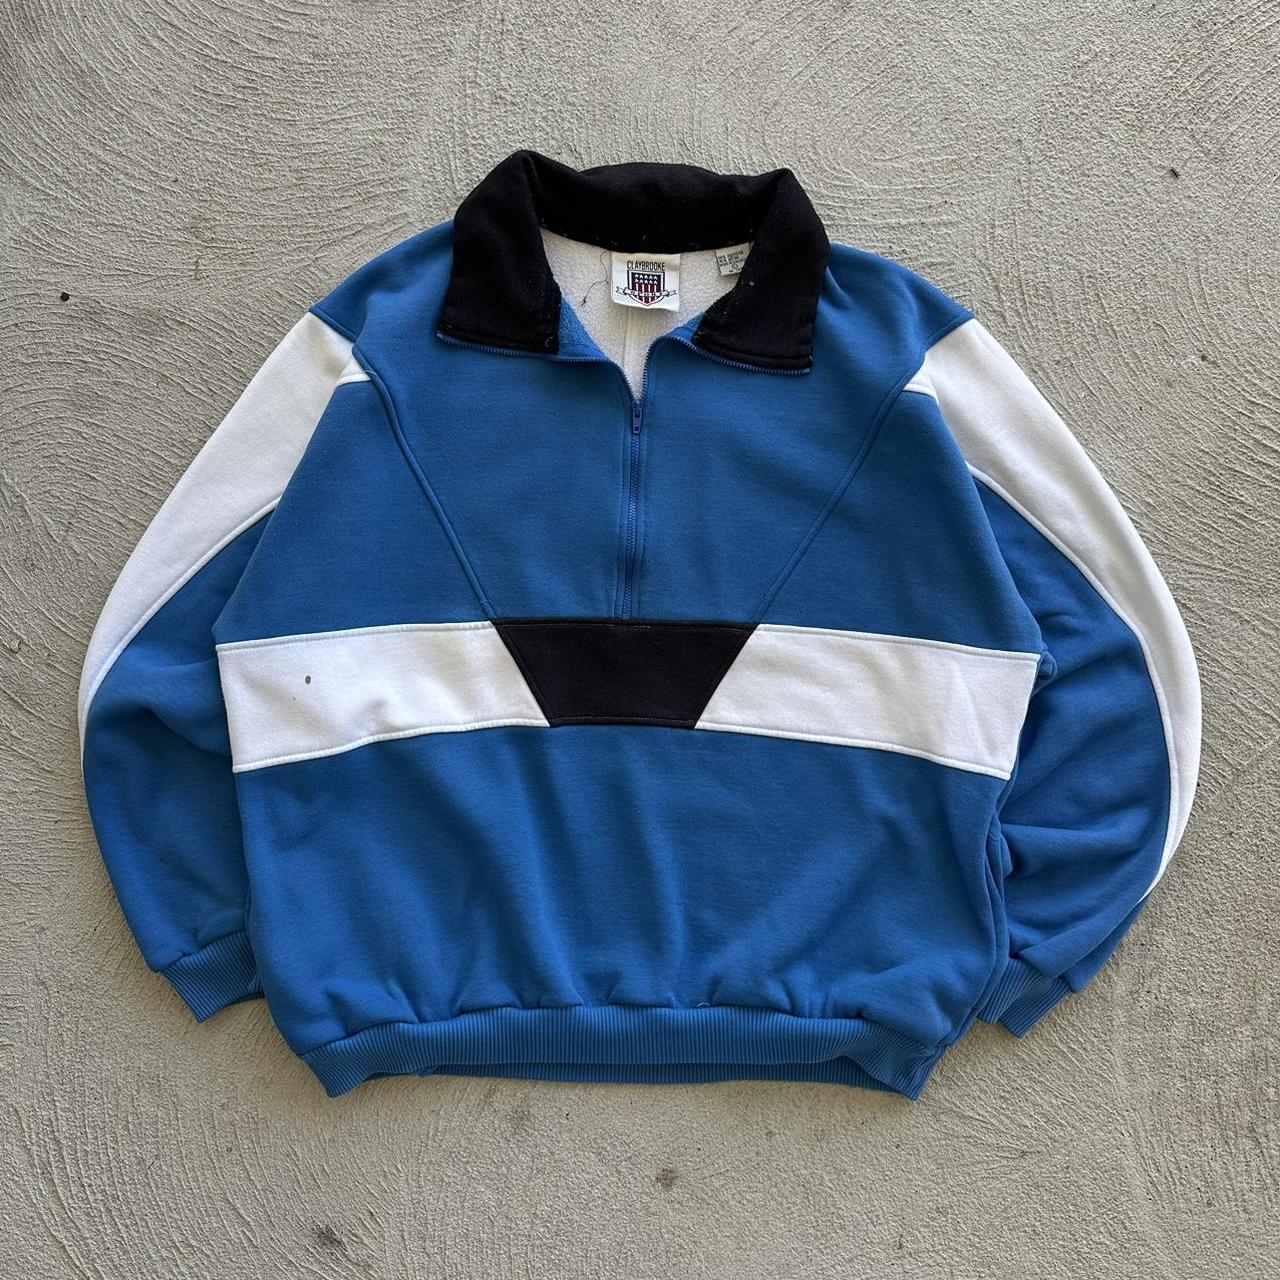 Fishing Vintage 90s Sweatshirt *1992 - heavyweight - Depop